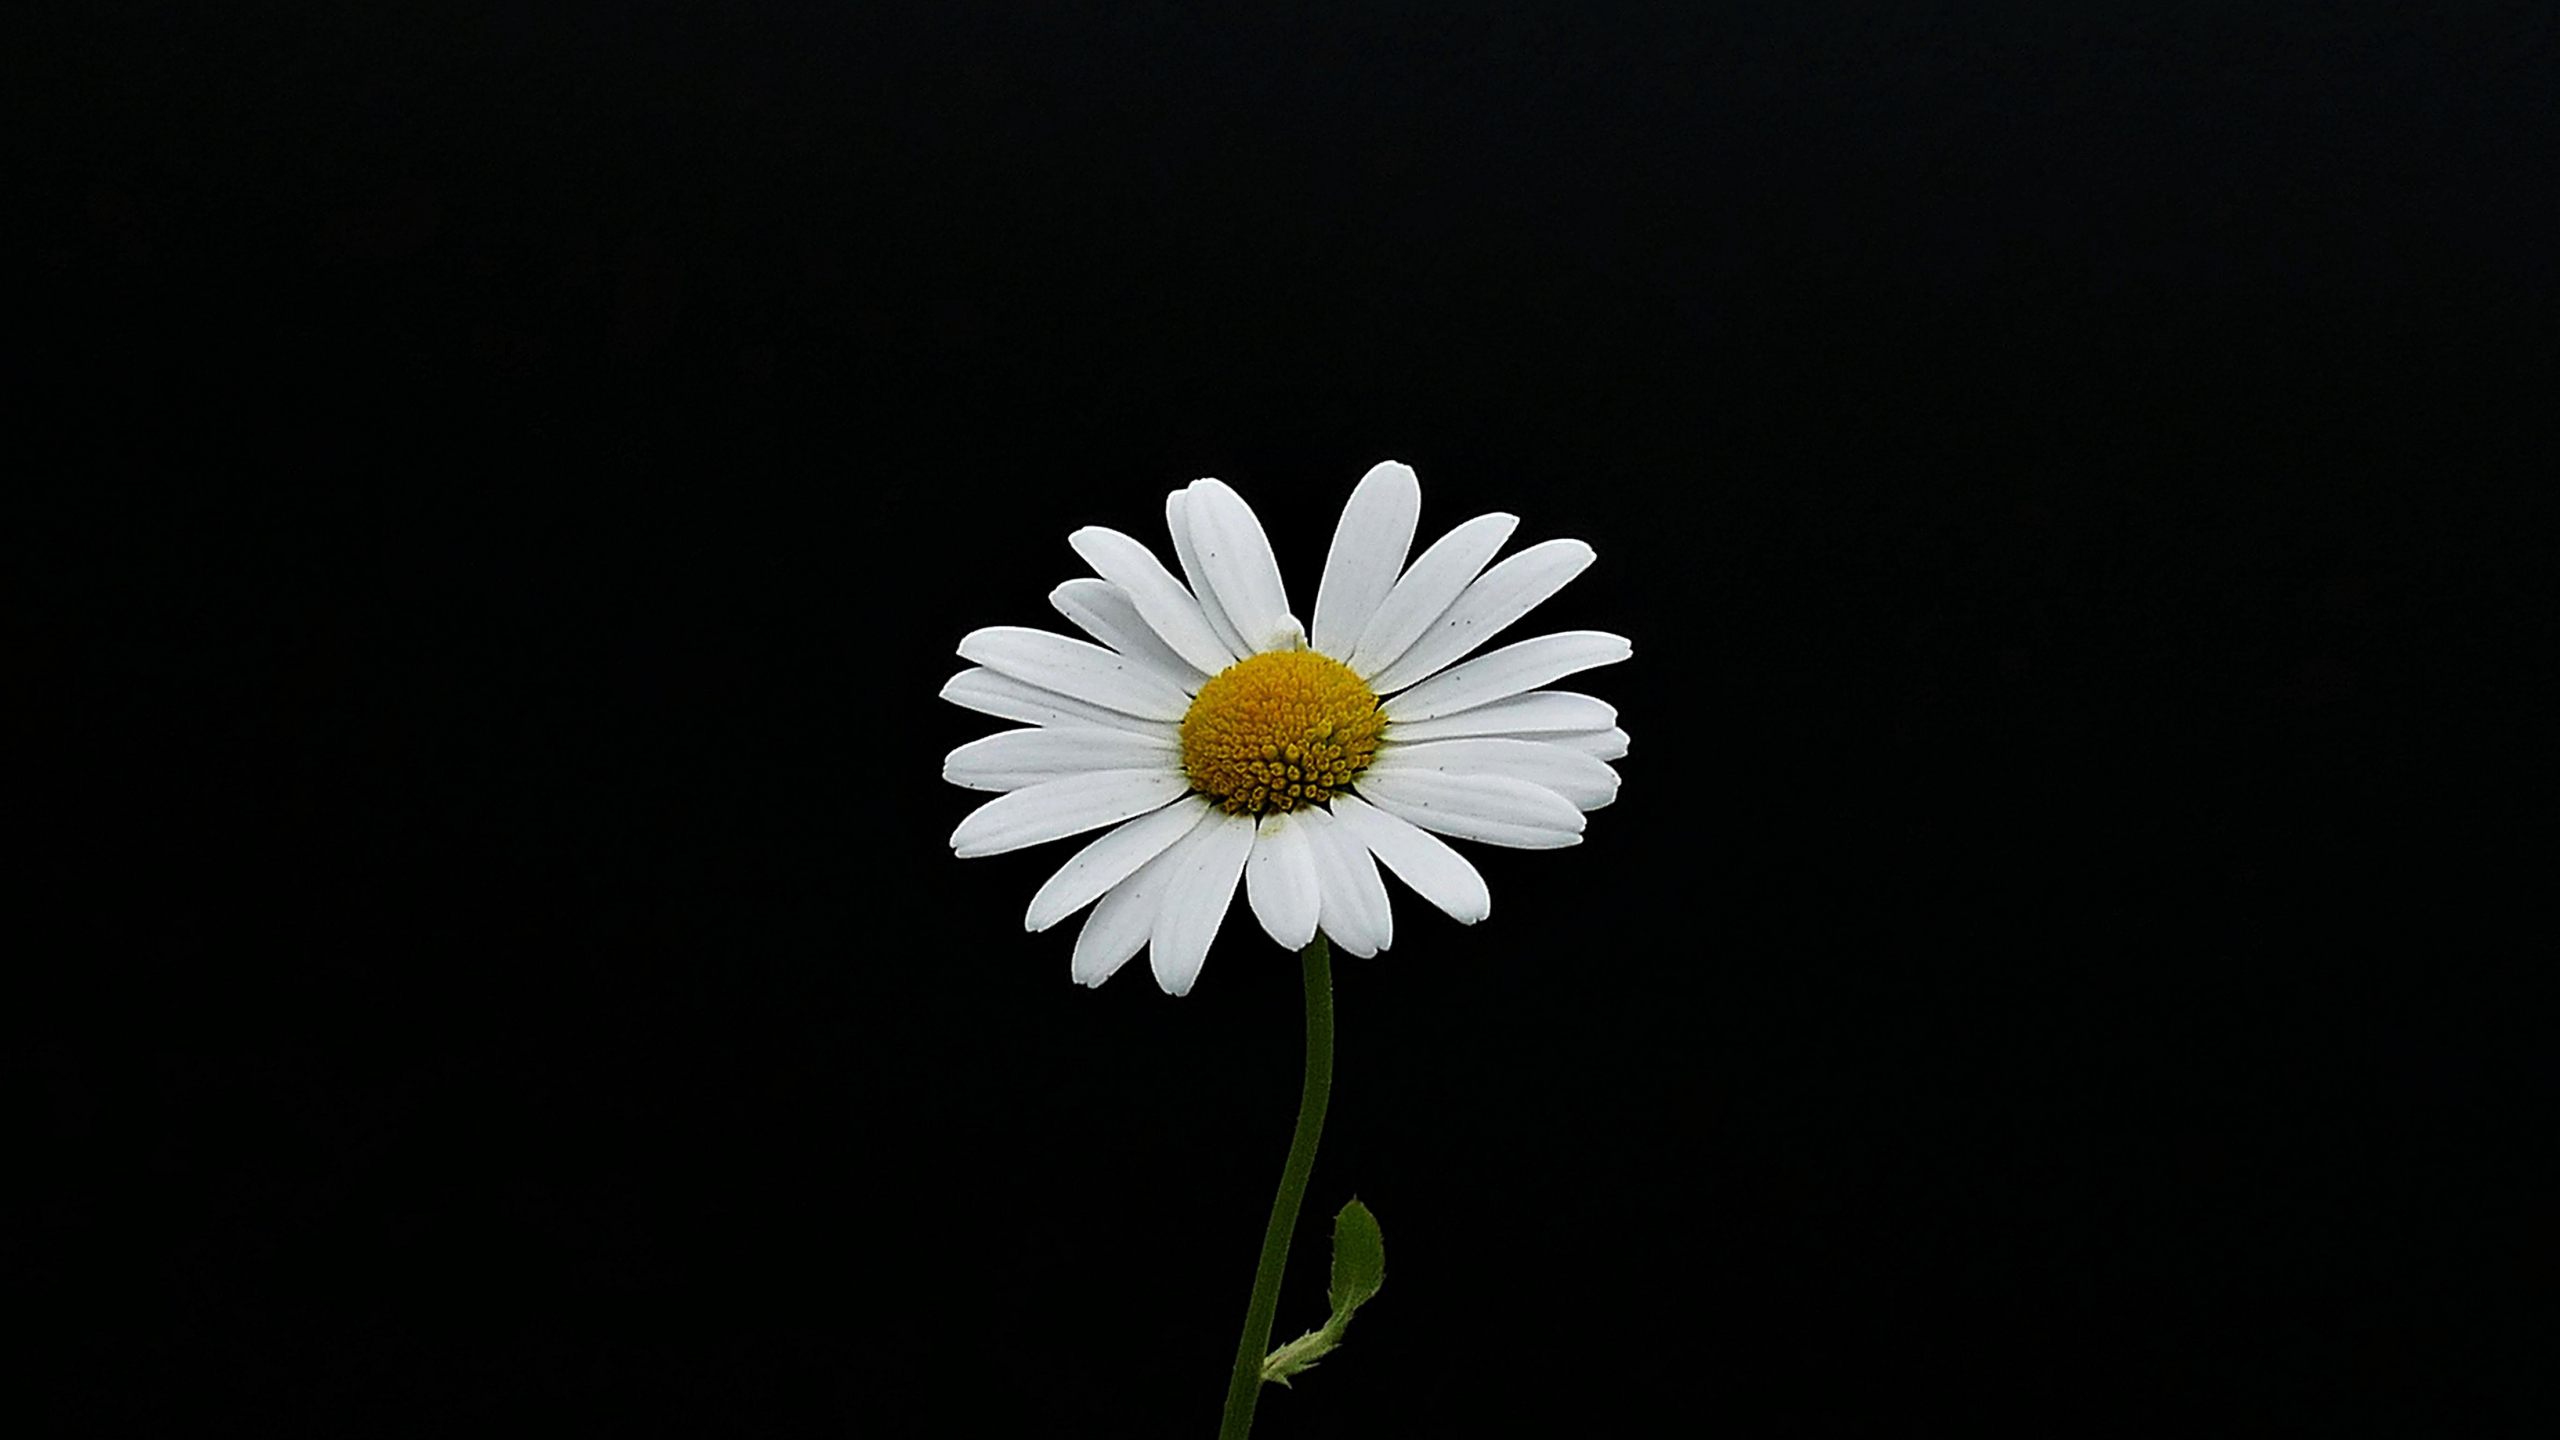 Download wallpaper 2560x1440 portrait, white flower, minimal, daisy, dual wide 16:9 2560x1440 hd